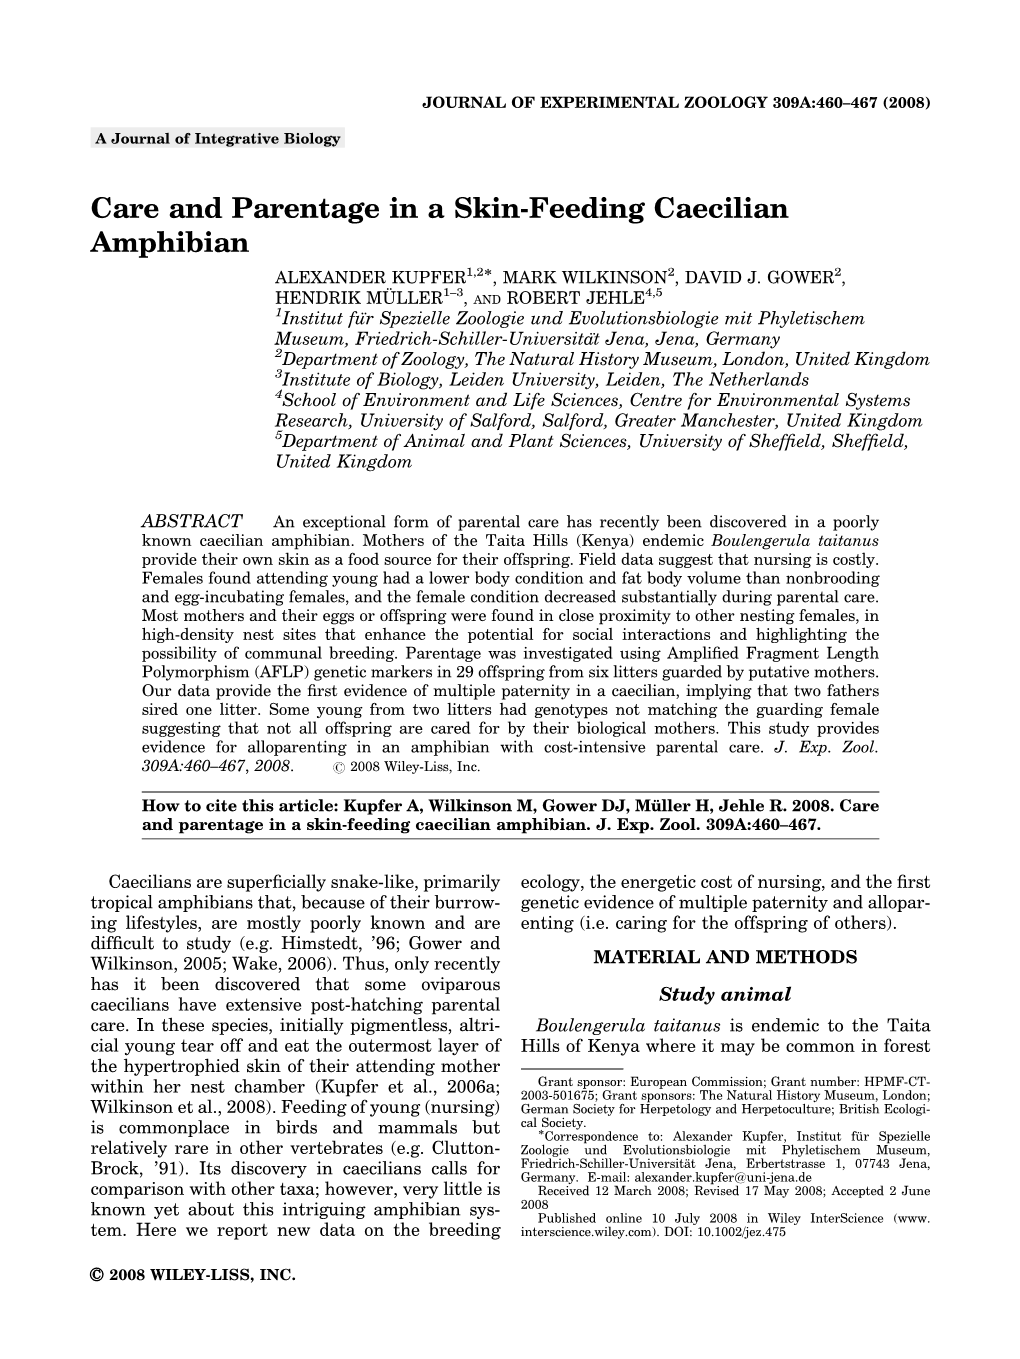 Care and Parentage in a Skin-Feeding Caecilian Amphibian ALEXANDER KUPFER1,2Ã, MARK WILKINSON2, DAVID J